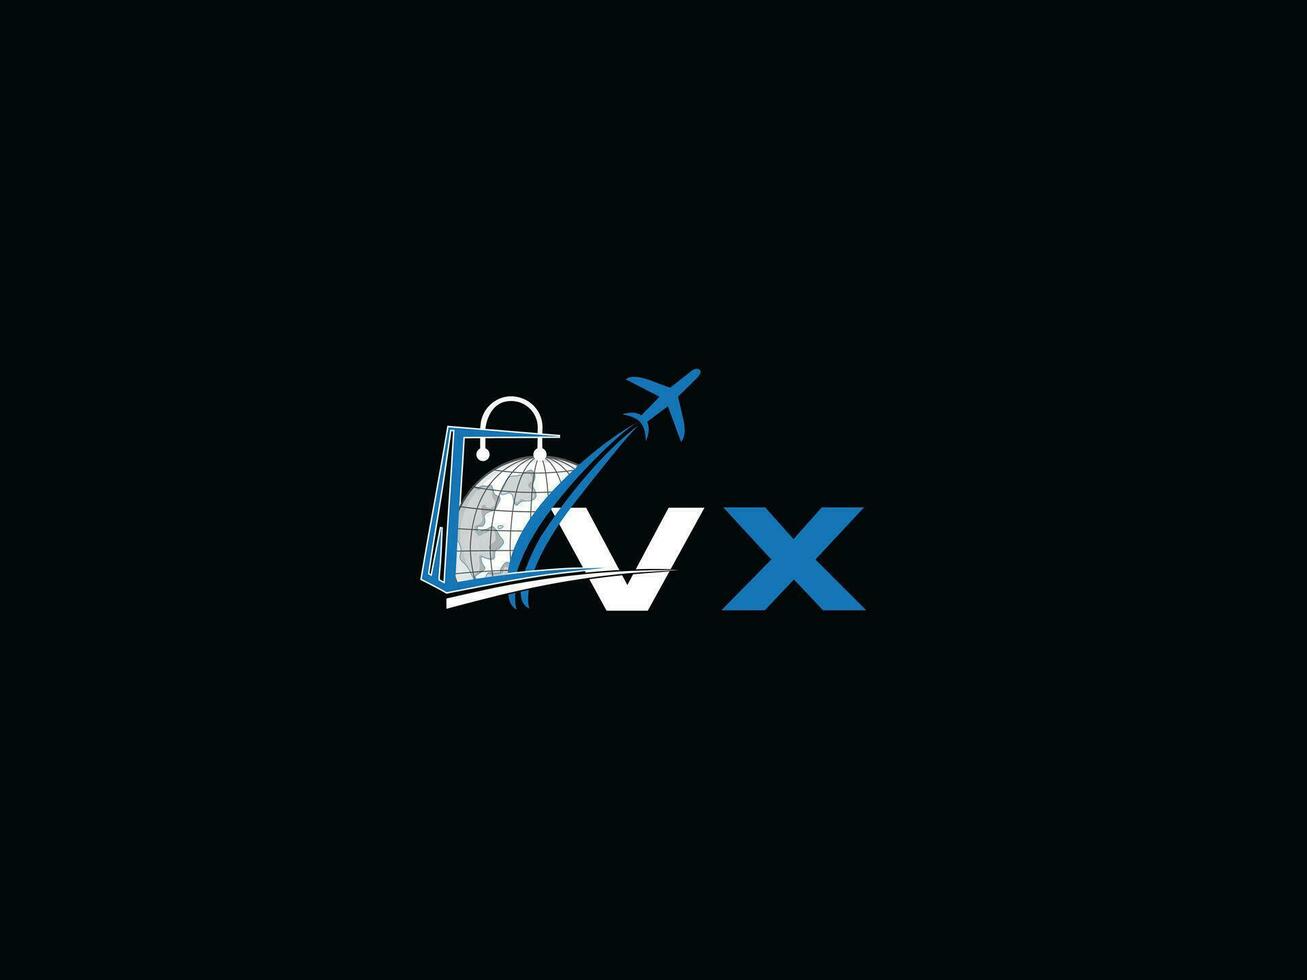 sencillo aire vx viaje logo icono, inicial global vx logo para viaje agencia vector